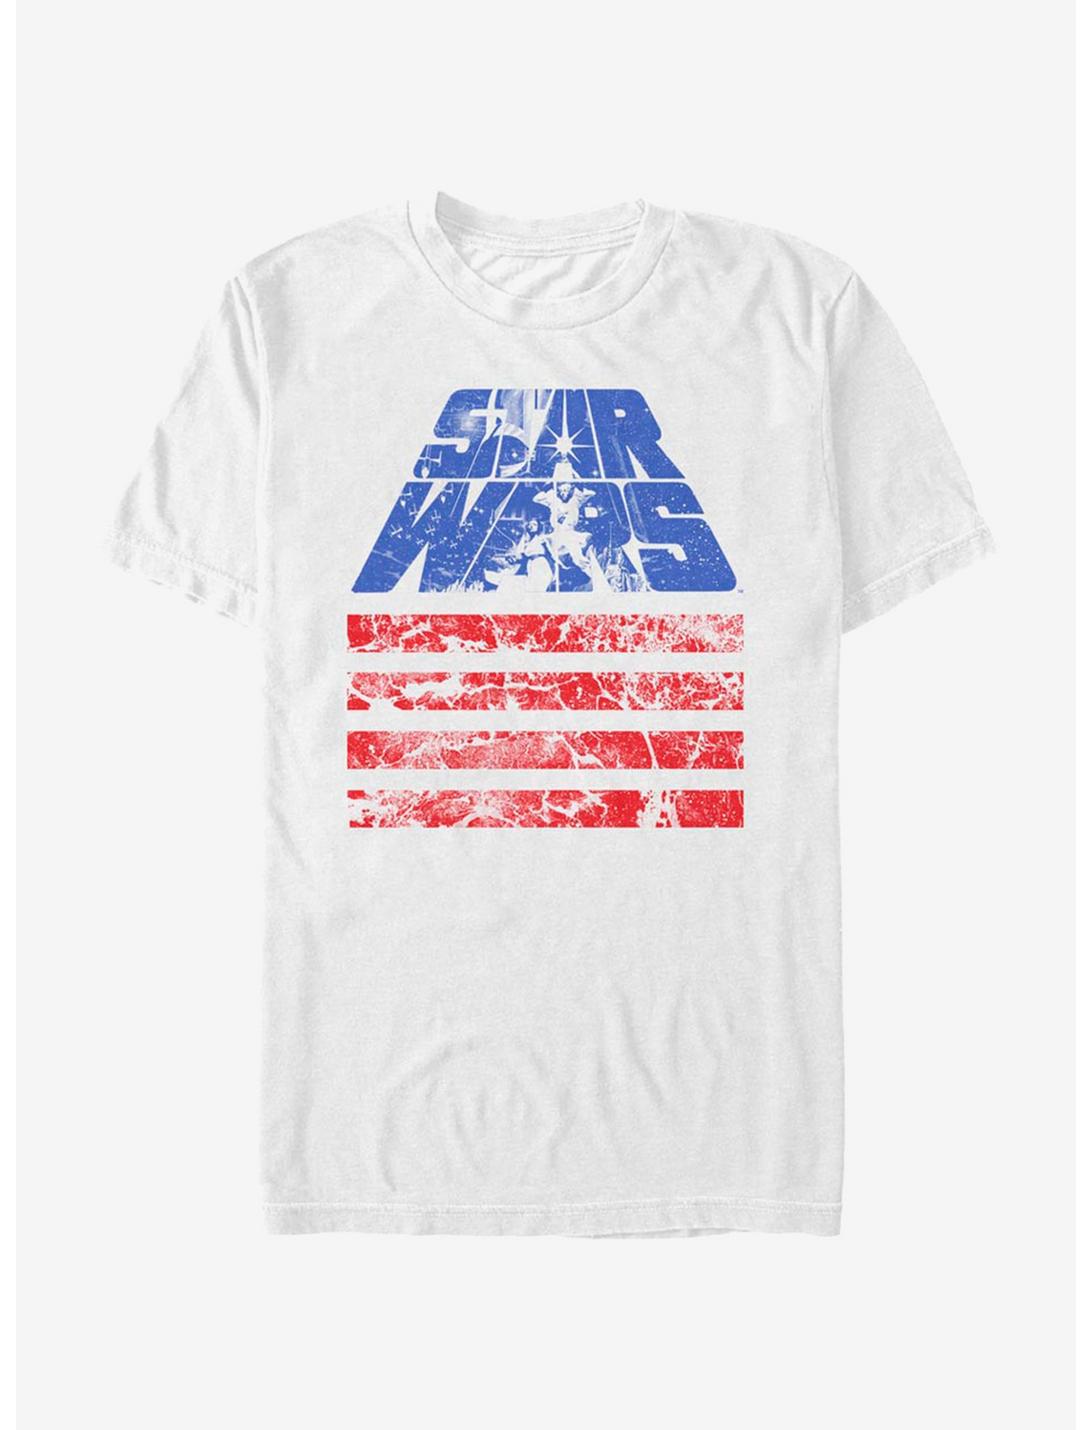 Star Wars Star Glory T-Shirt, WHITE, hi-res